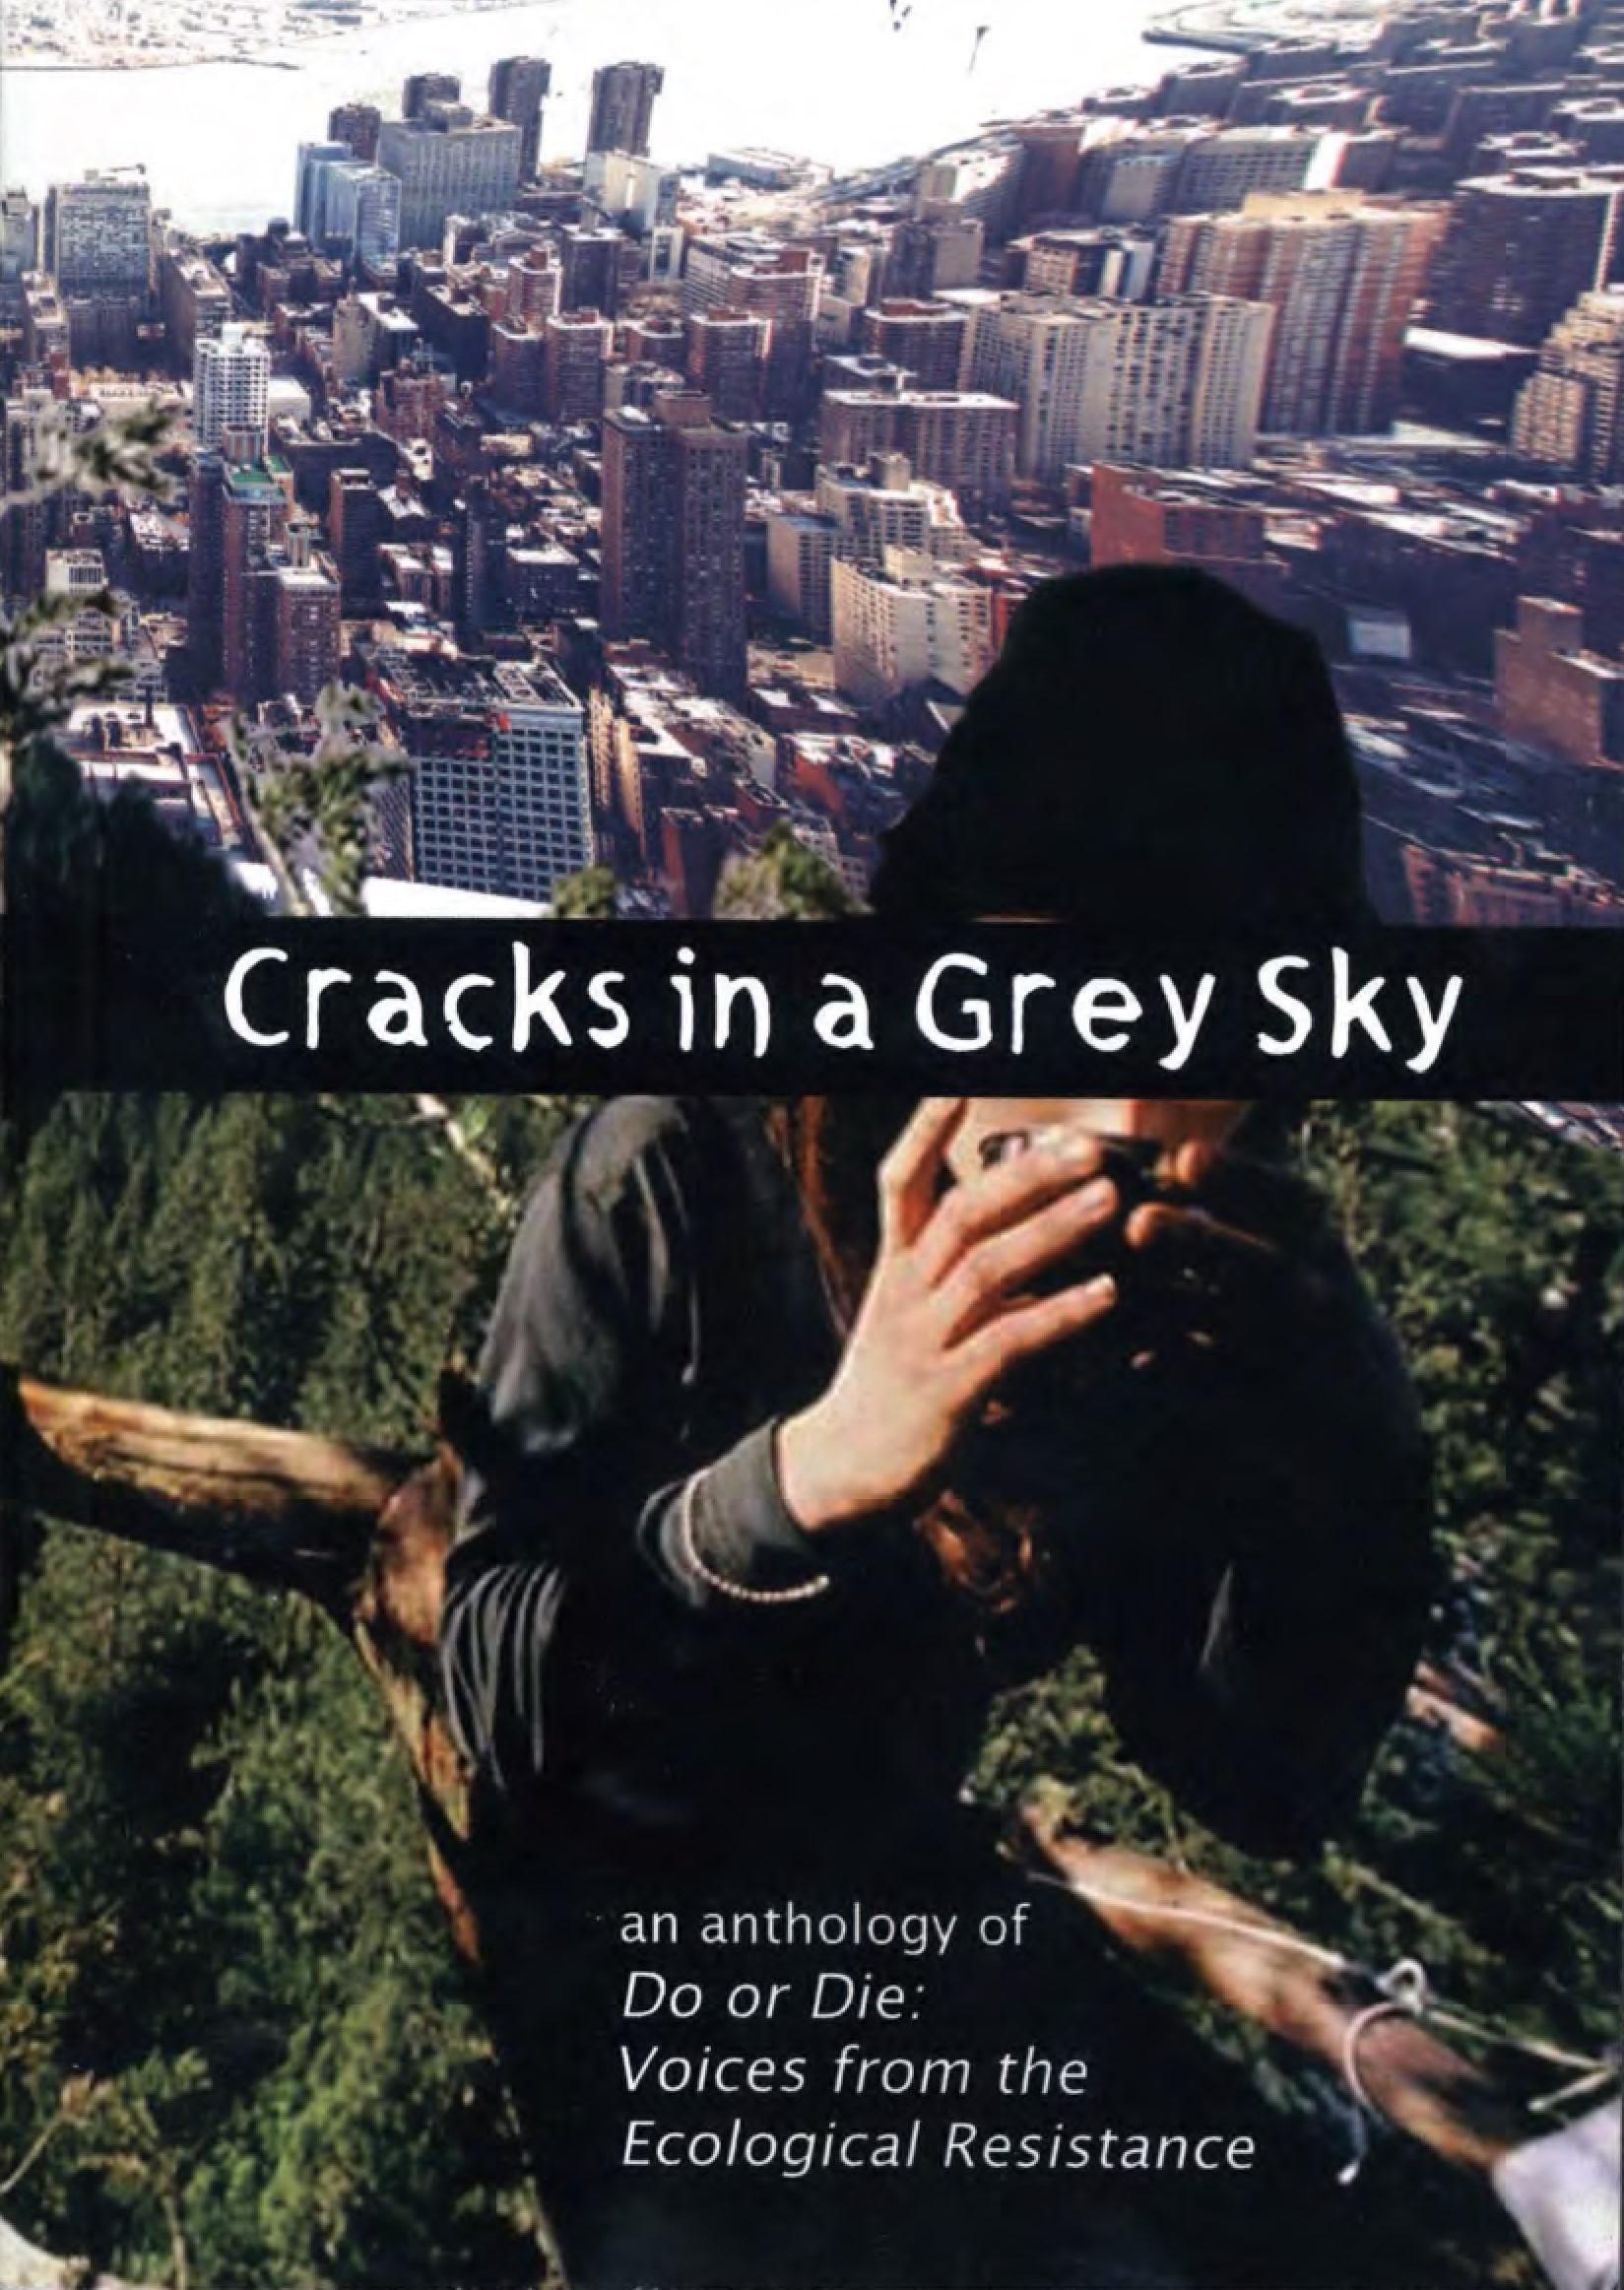 c-i-cracks-in-a-grey-sky-an-anthology-of-do-or-die-1.jpg